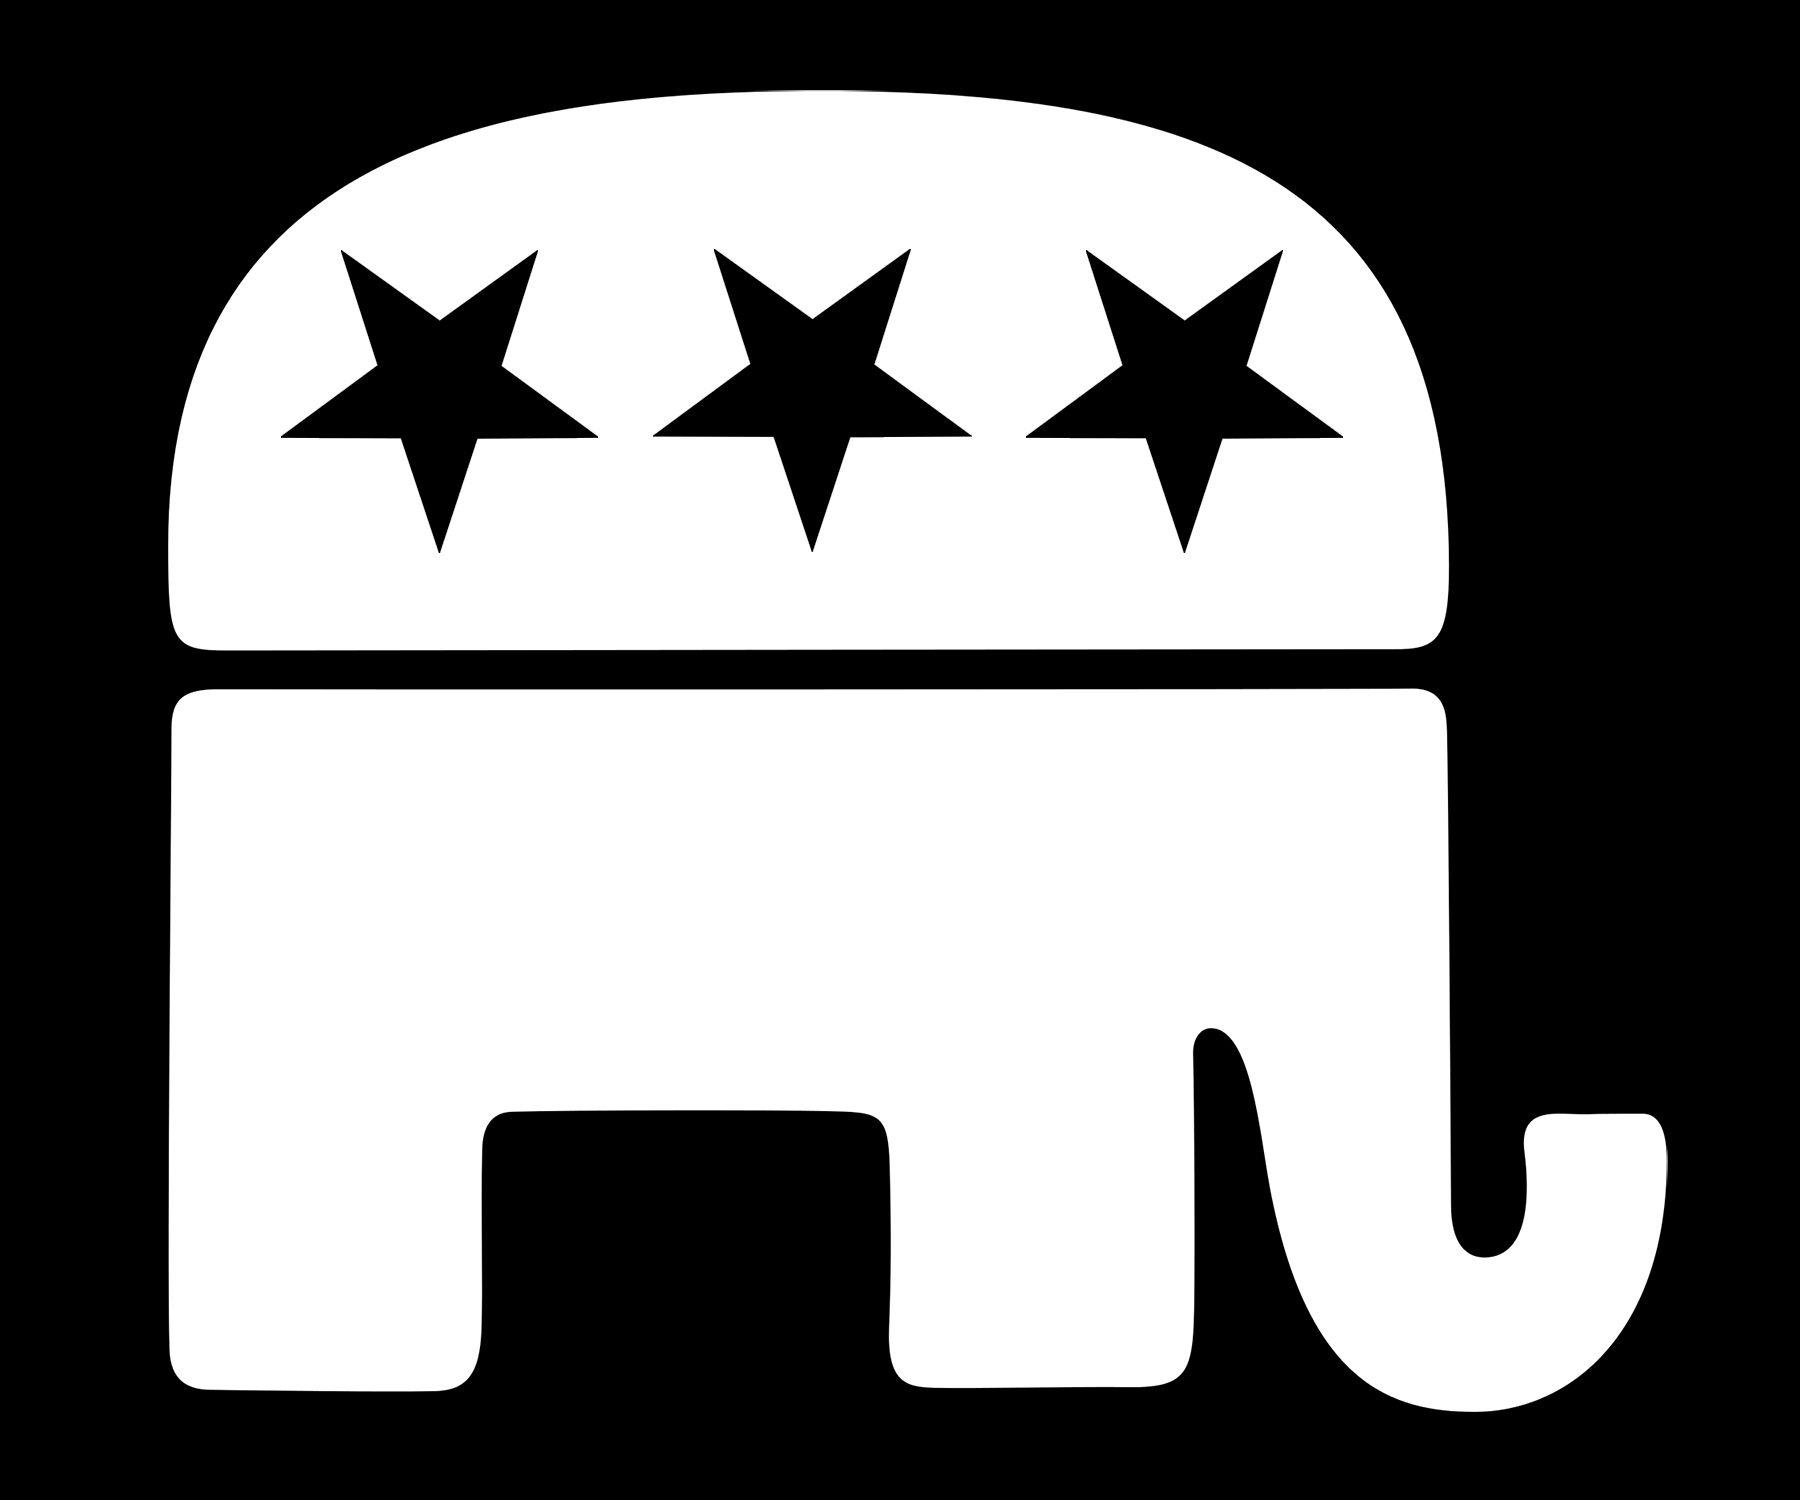 Republican Elephant Logo - Republican Logo, Republican Symbol, Meaning, History and Evolution